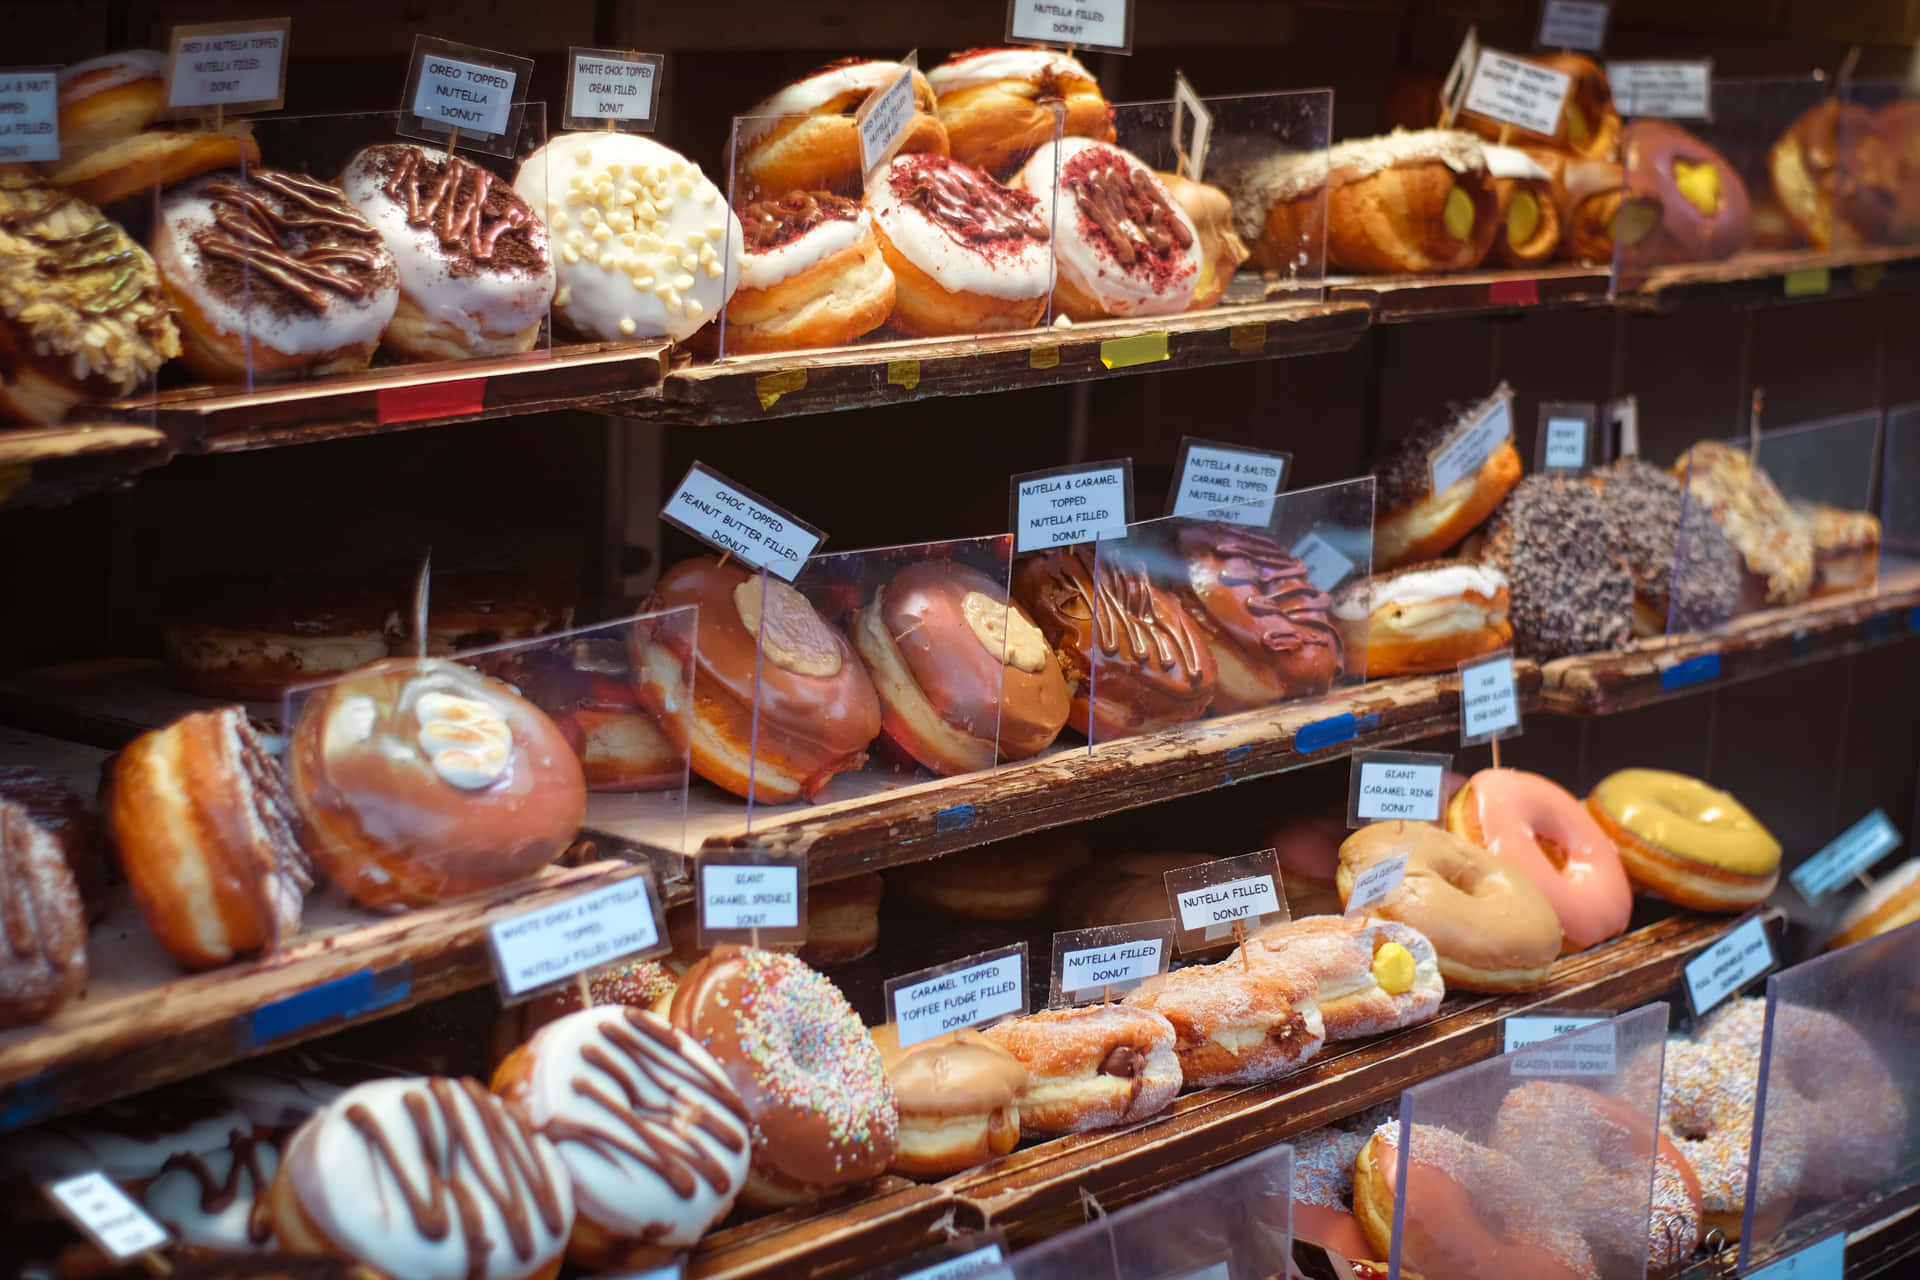 Enjoy fresh-baked treats in a cozy bakery